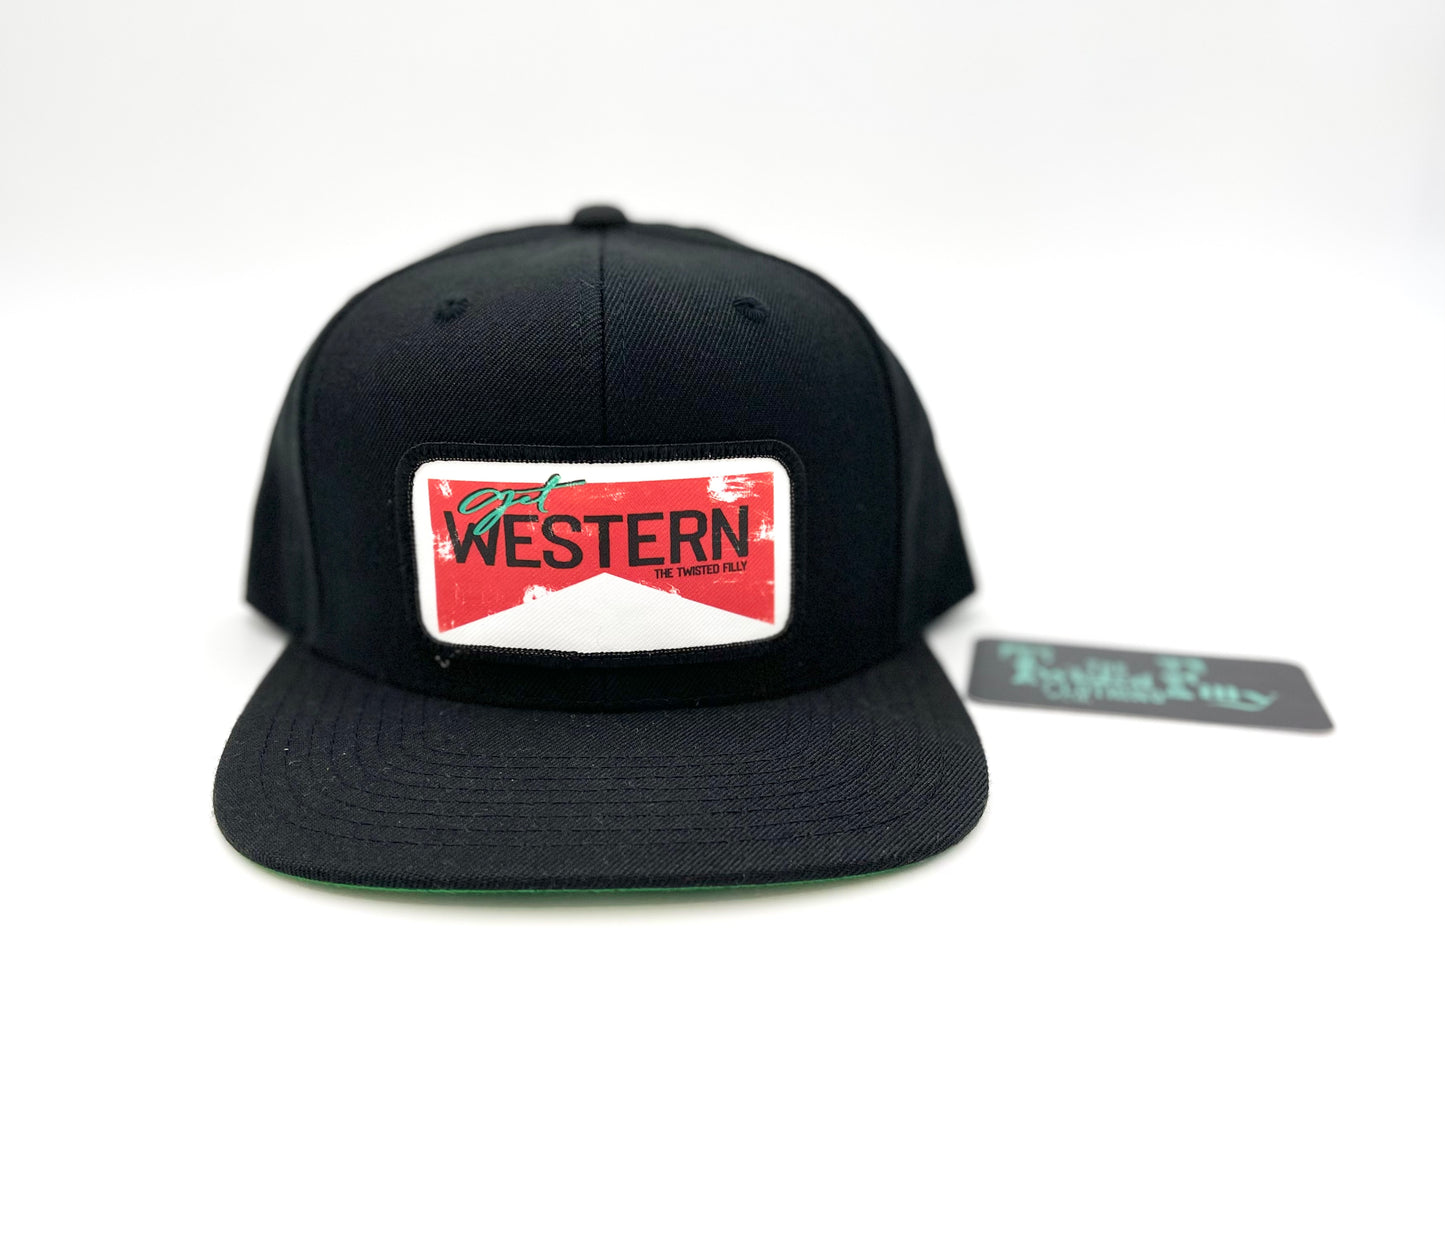 Get Western - Youth/Adult Snapback Hat - Black